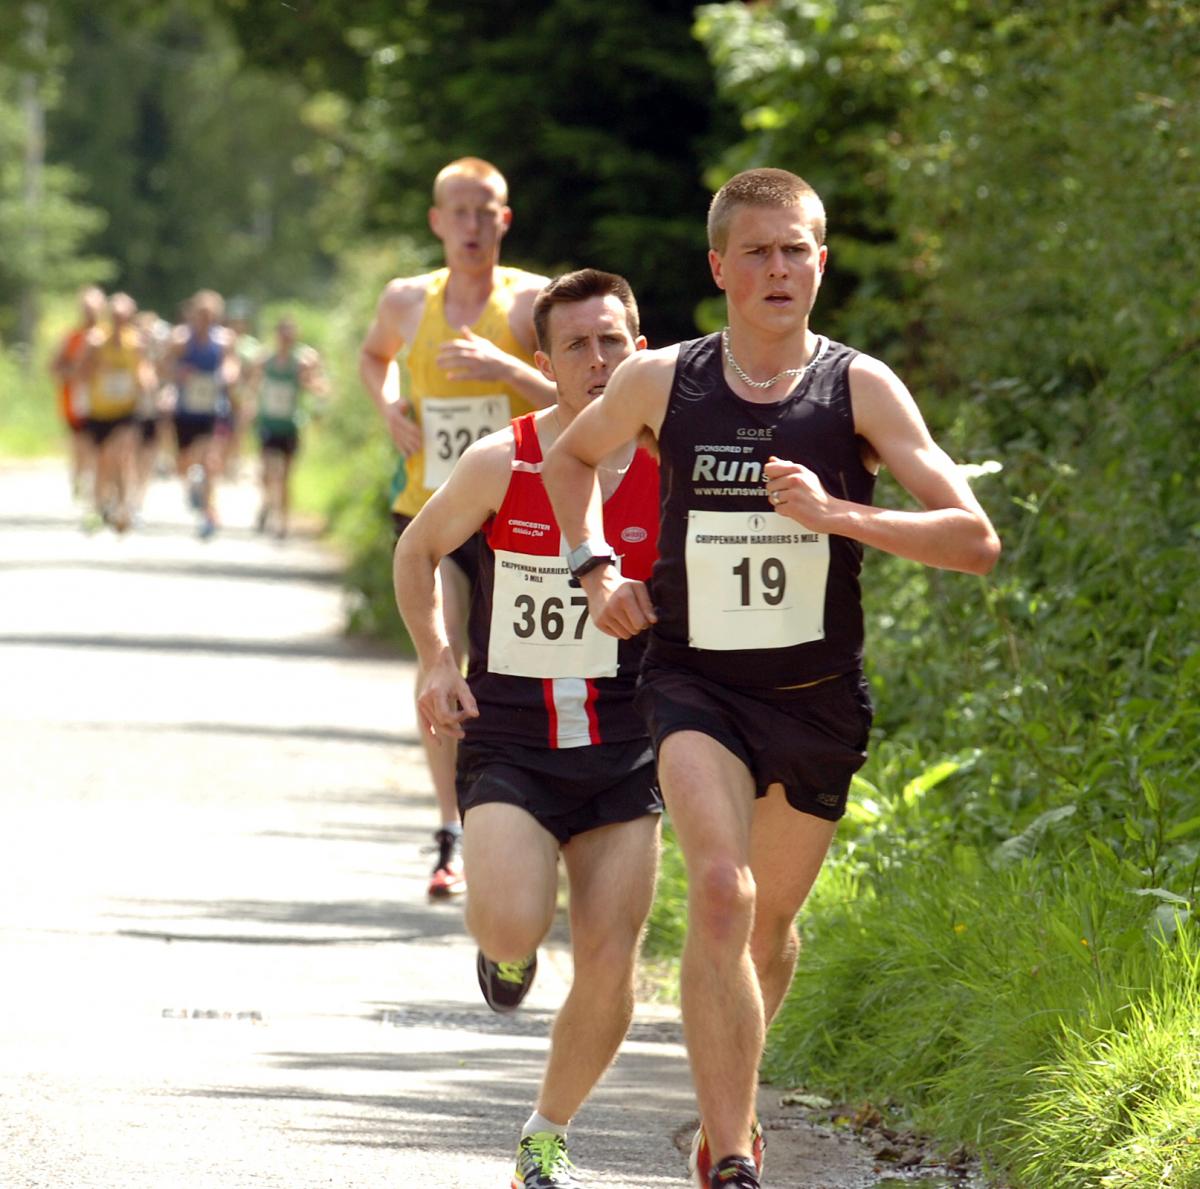 Chippenham 5 Mile Race